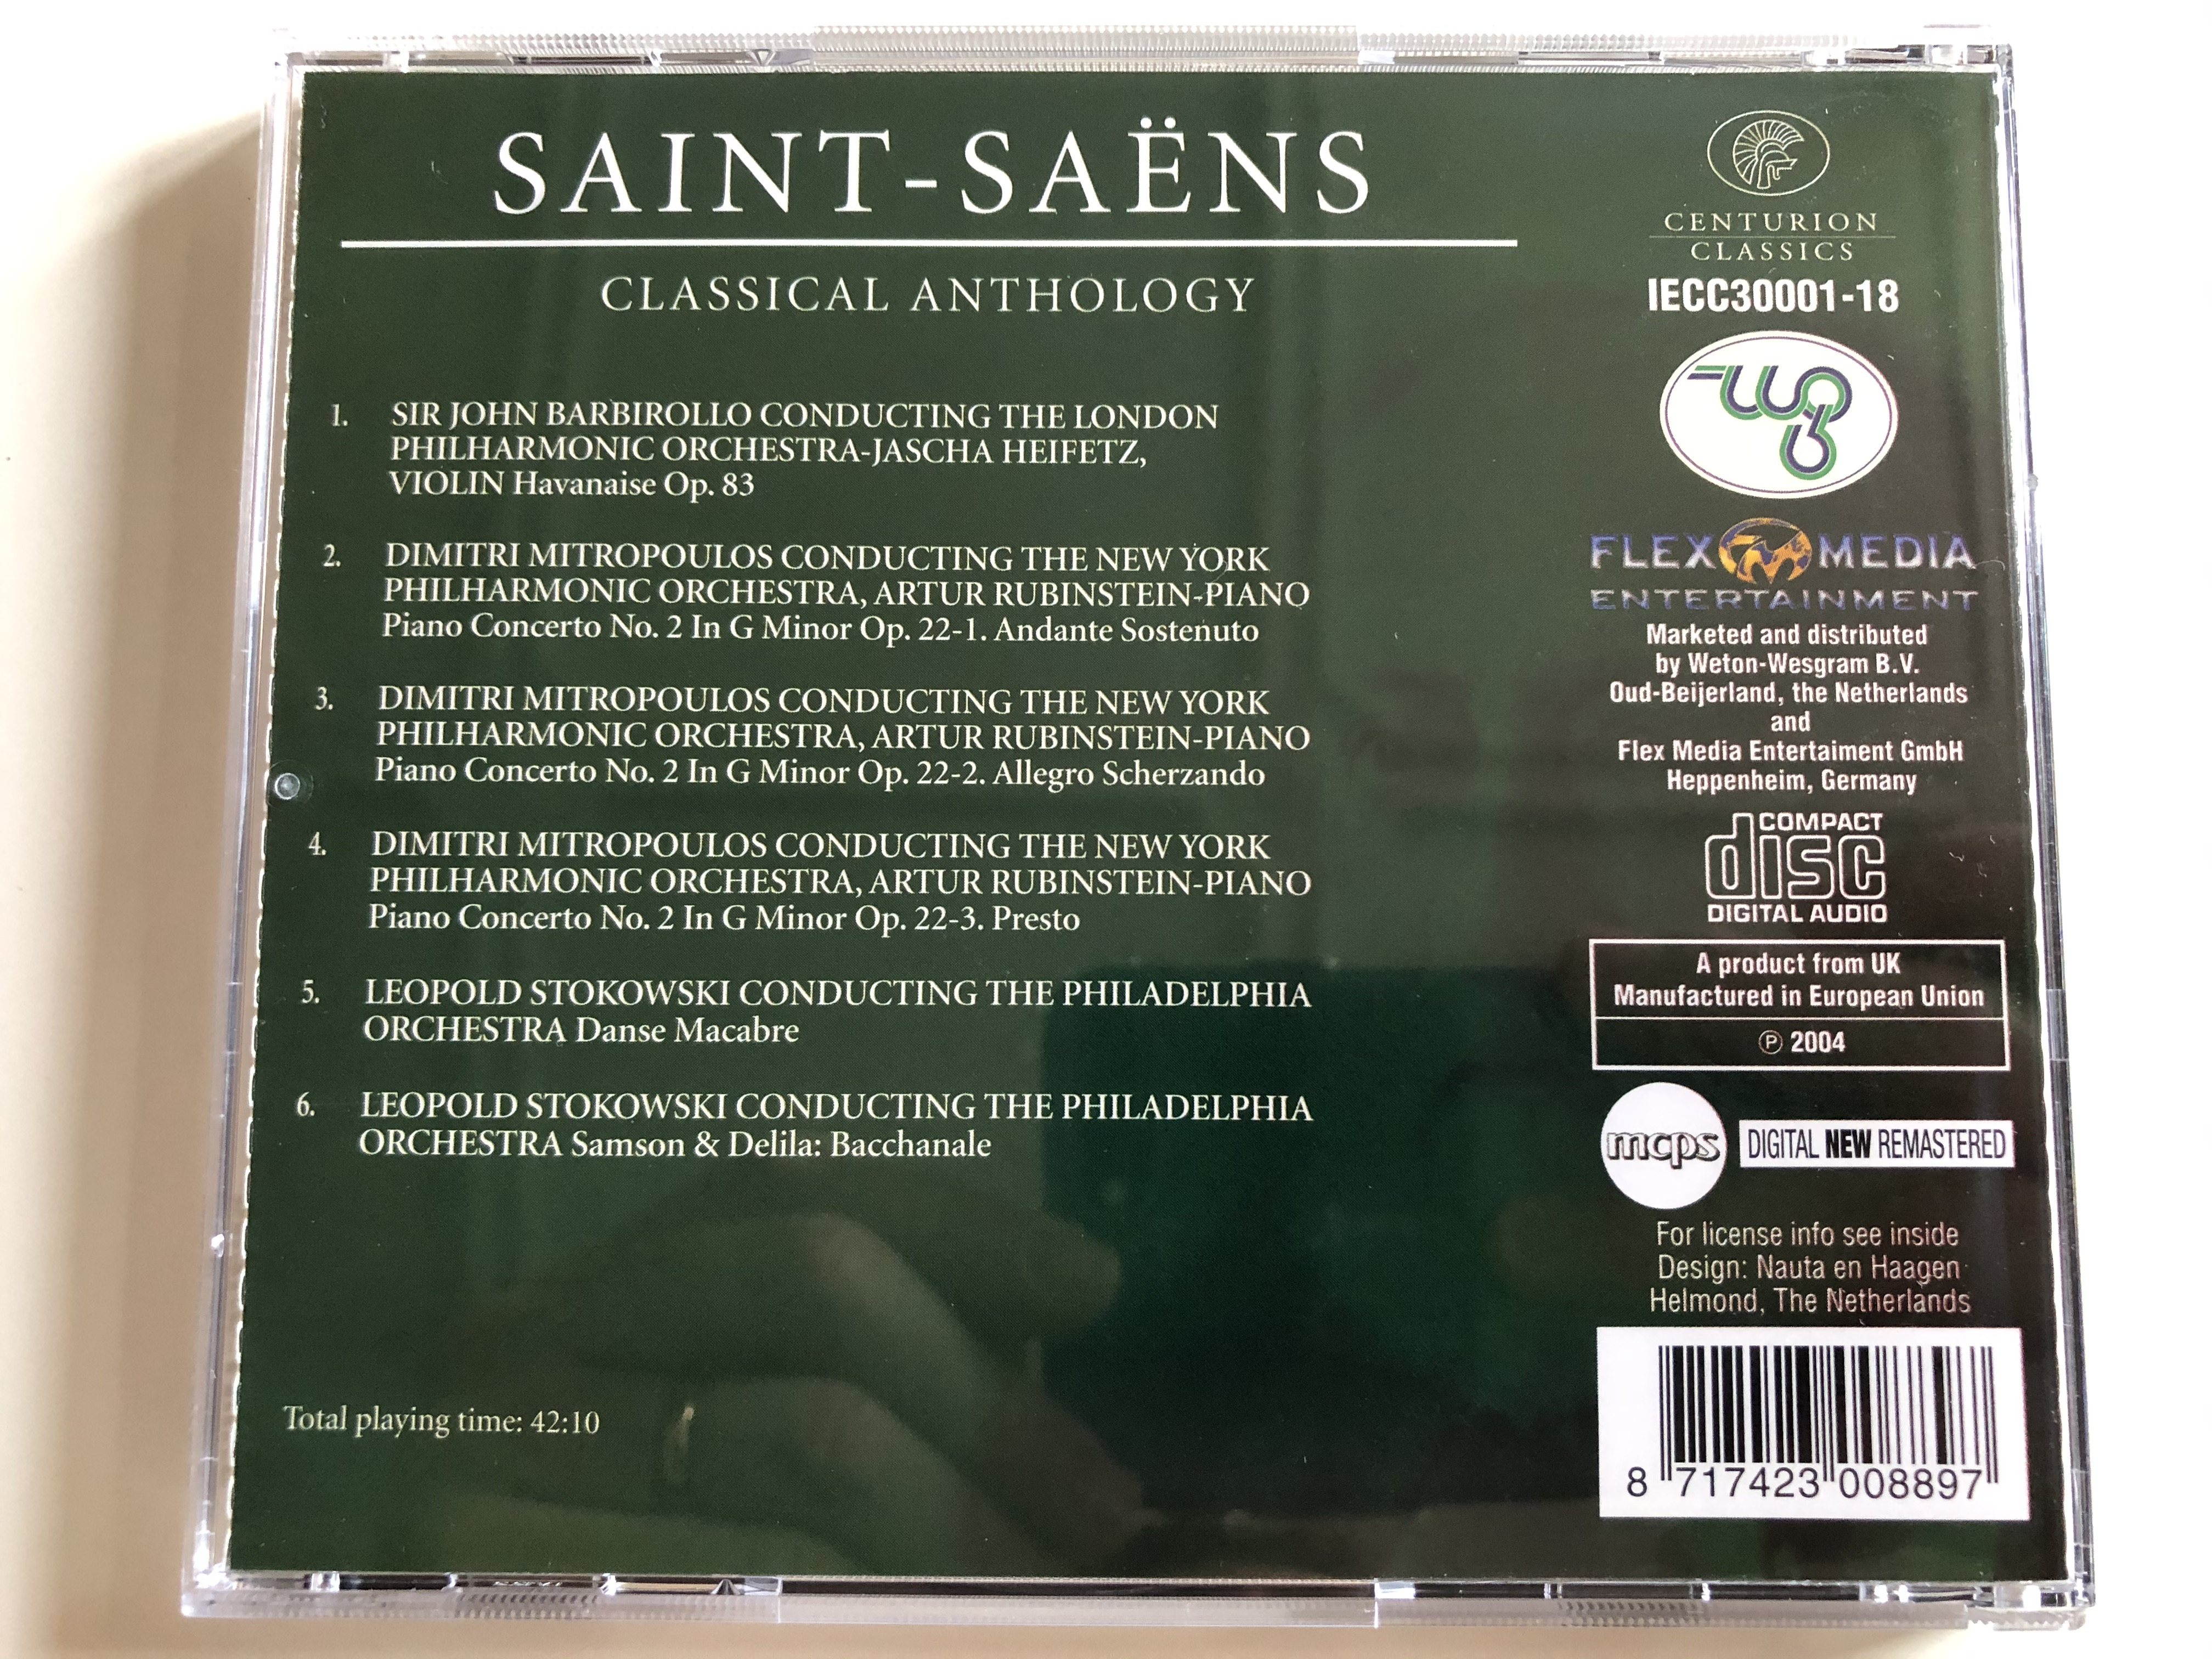 saint-saens-havanaise-op.-83-piano-concerto-no.-2-danse-macabre-samson-delila-the-london-philharmonic-orchestra-conductor-sir-john-barbirollo-the-classical-anthology-centurion-class-4-.jpg